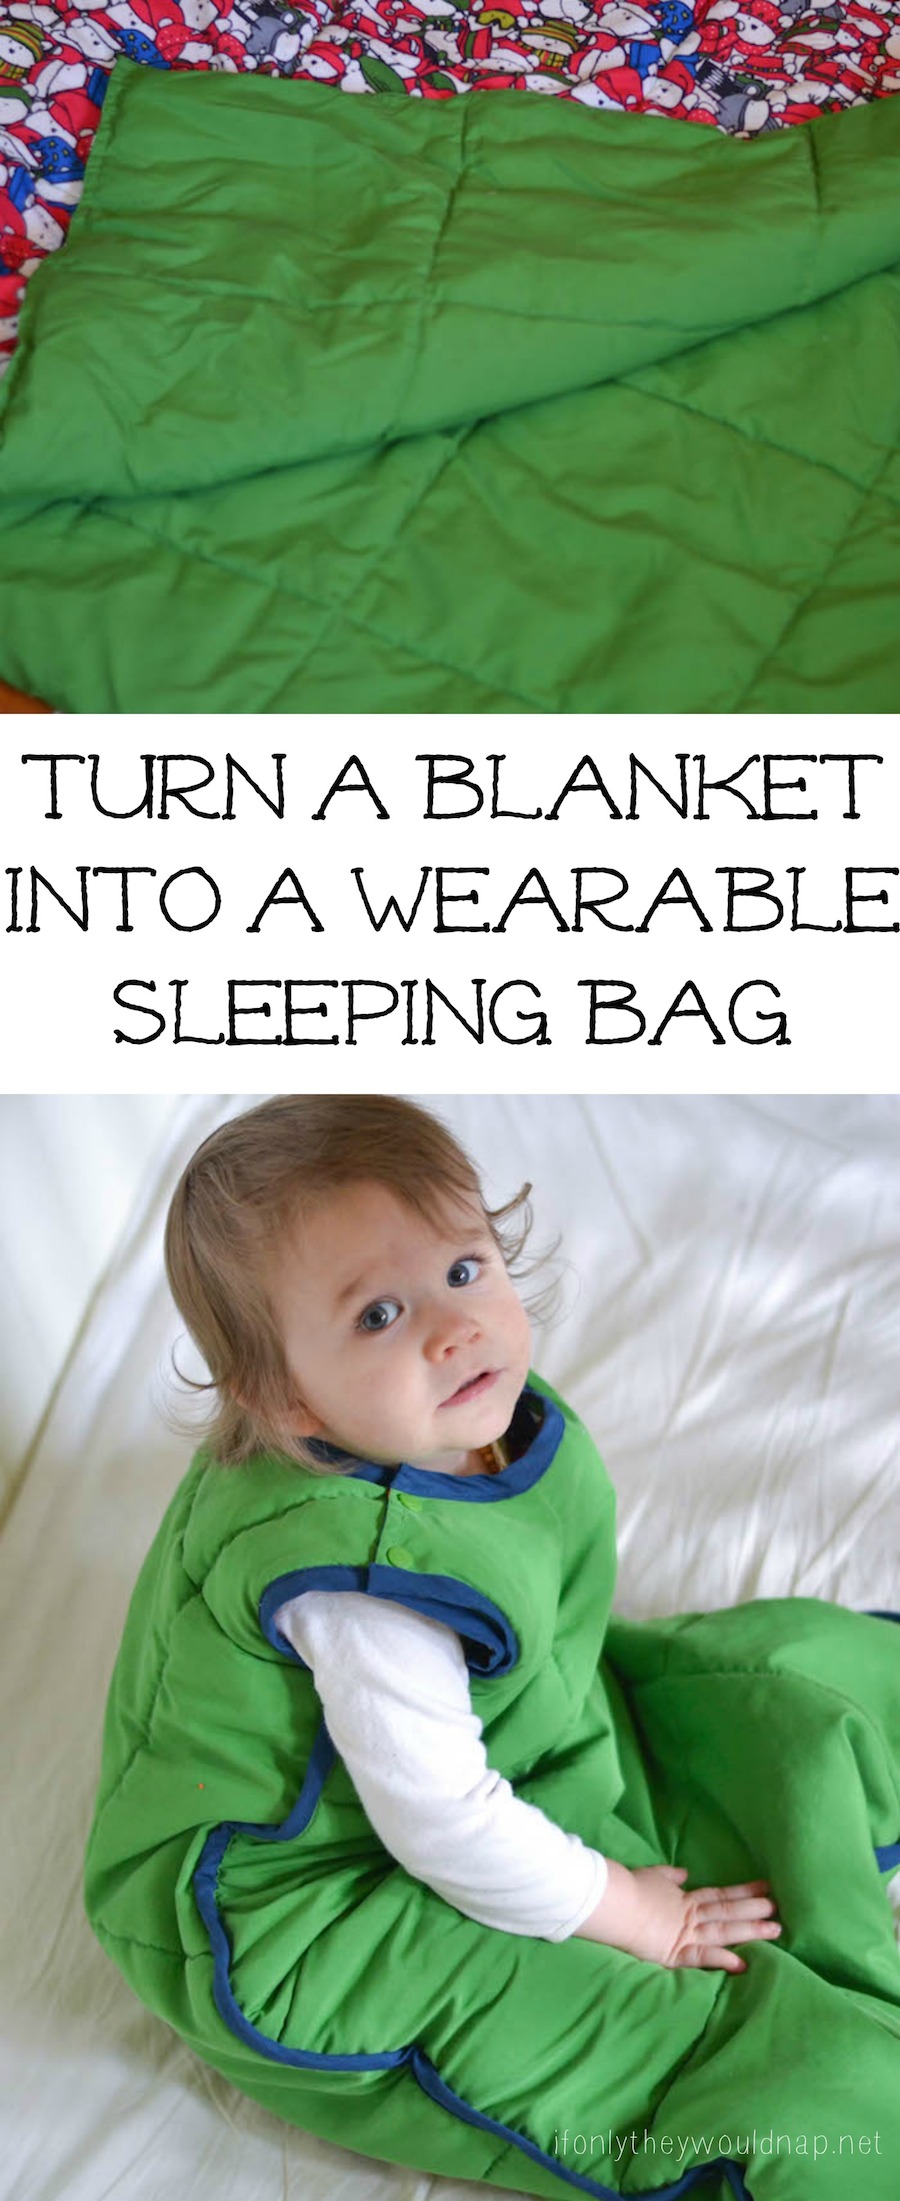 Turn a blanket into a wearable sleeping bag